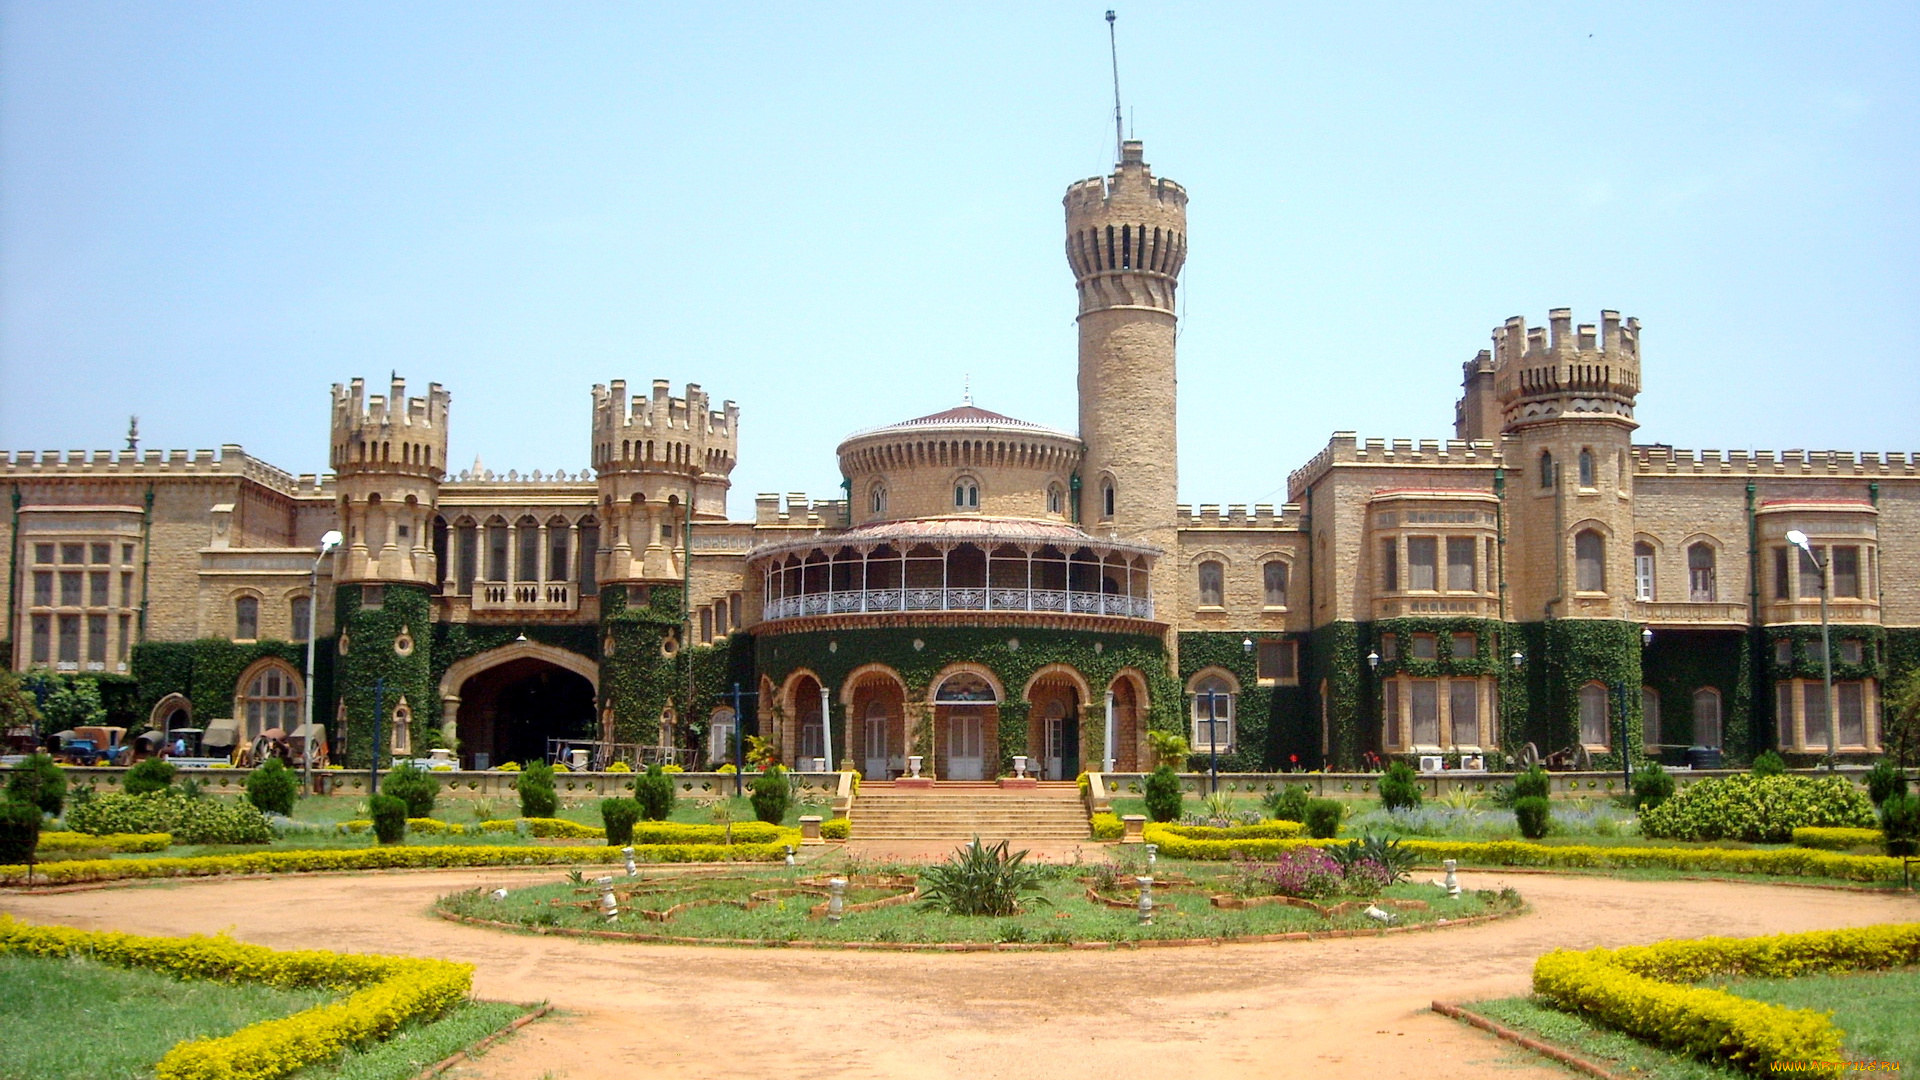 bangalore, palace, города, дворцы, замки, крепости, цветы, клумбы, дворец